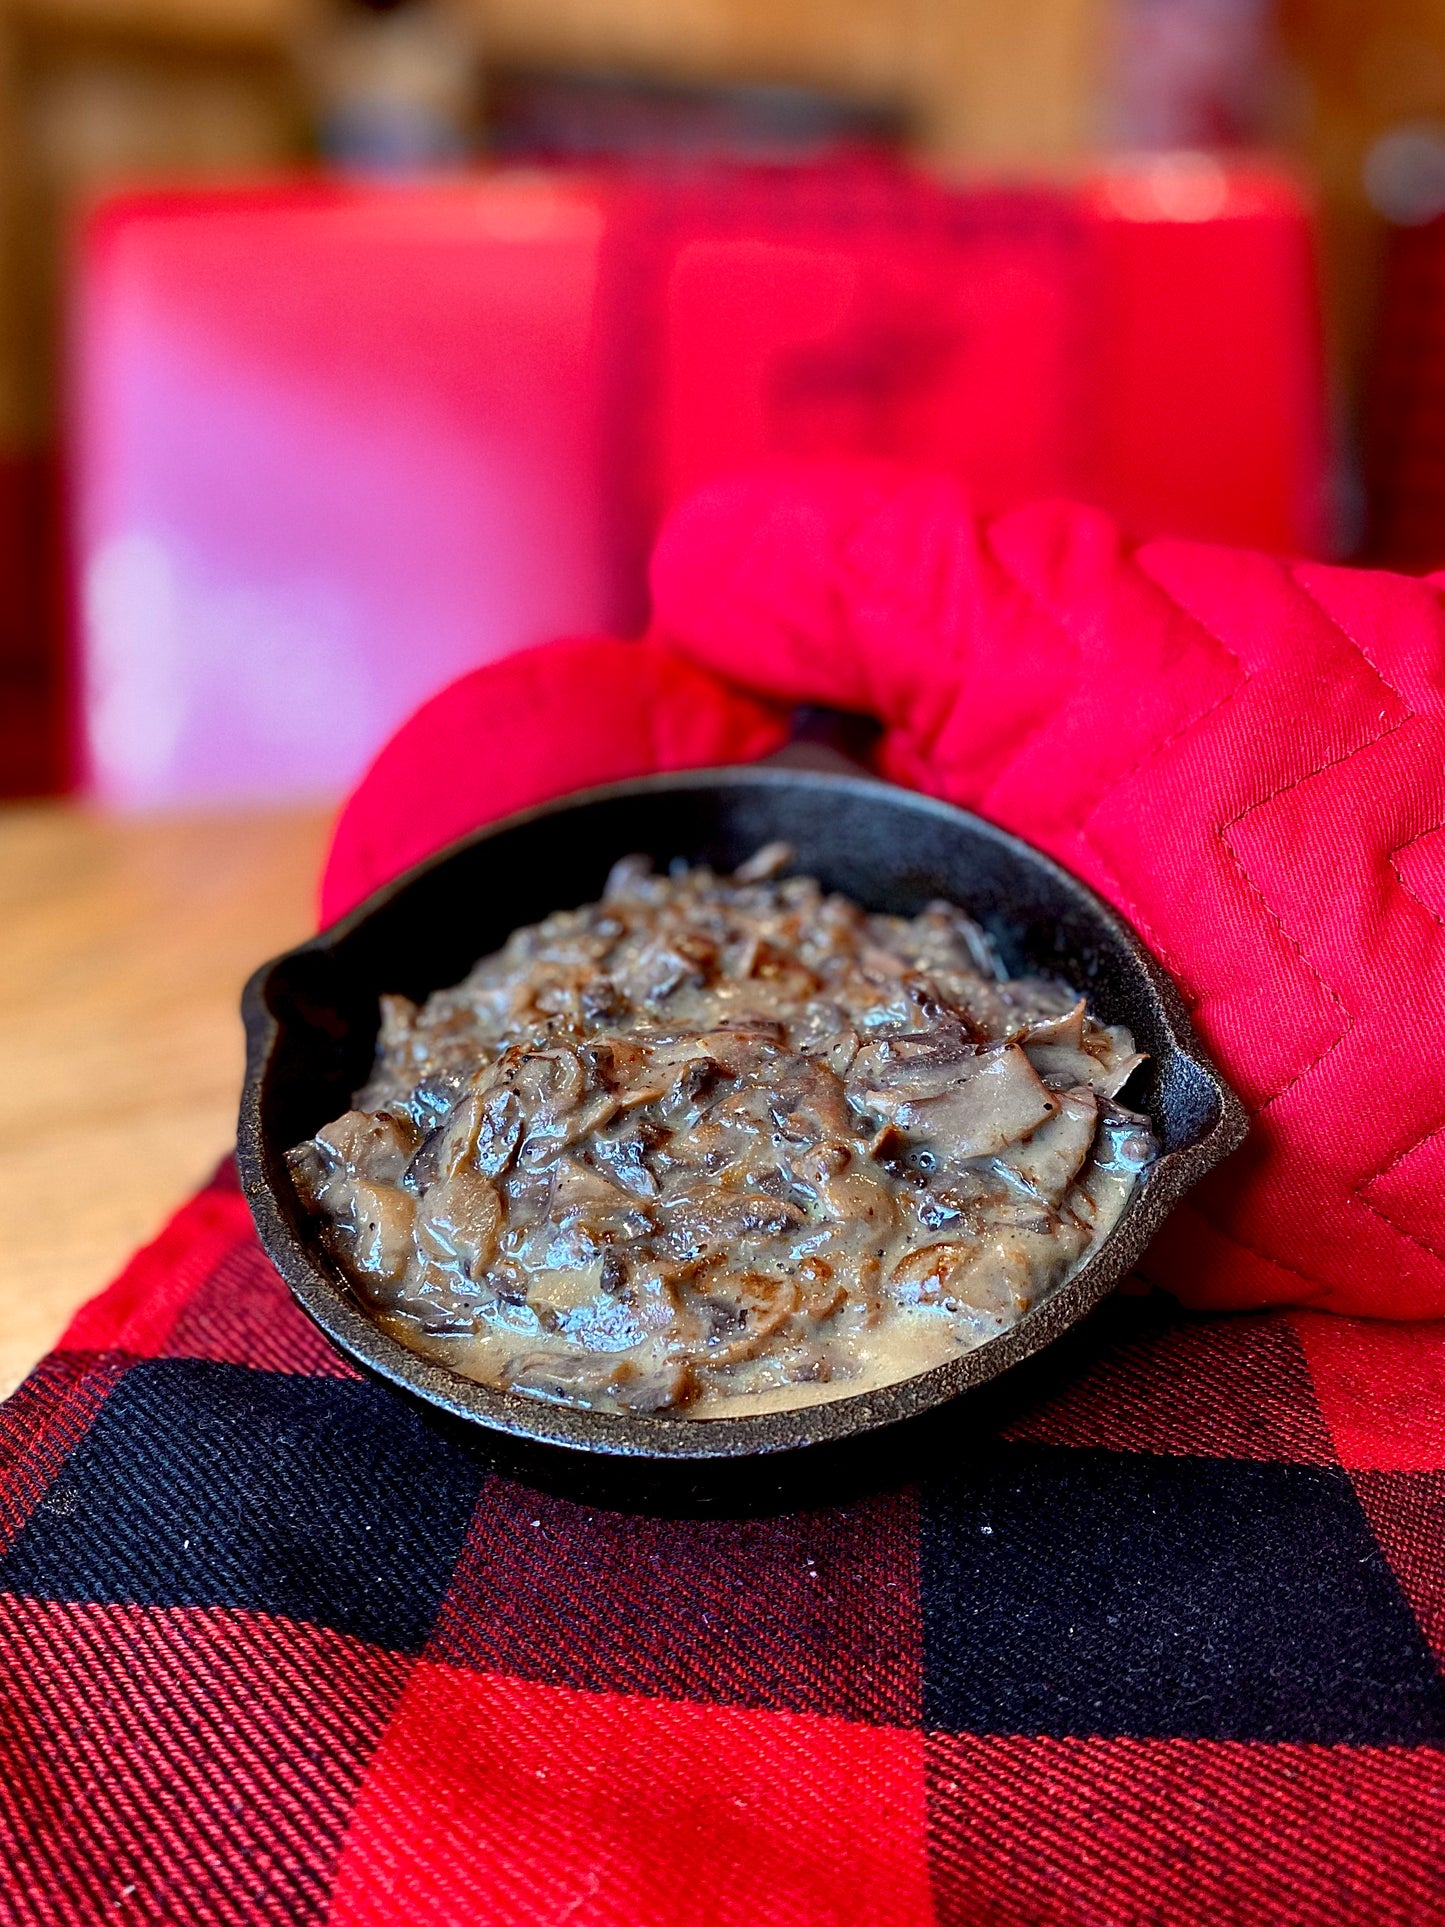 Pan-fried mushrooms